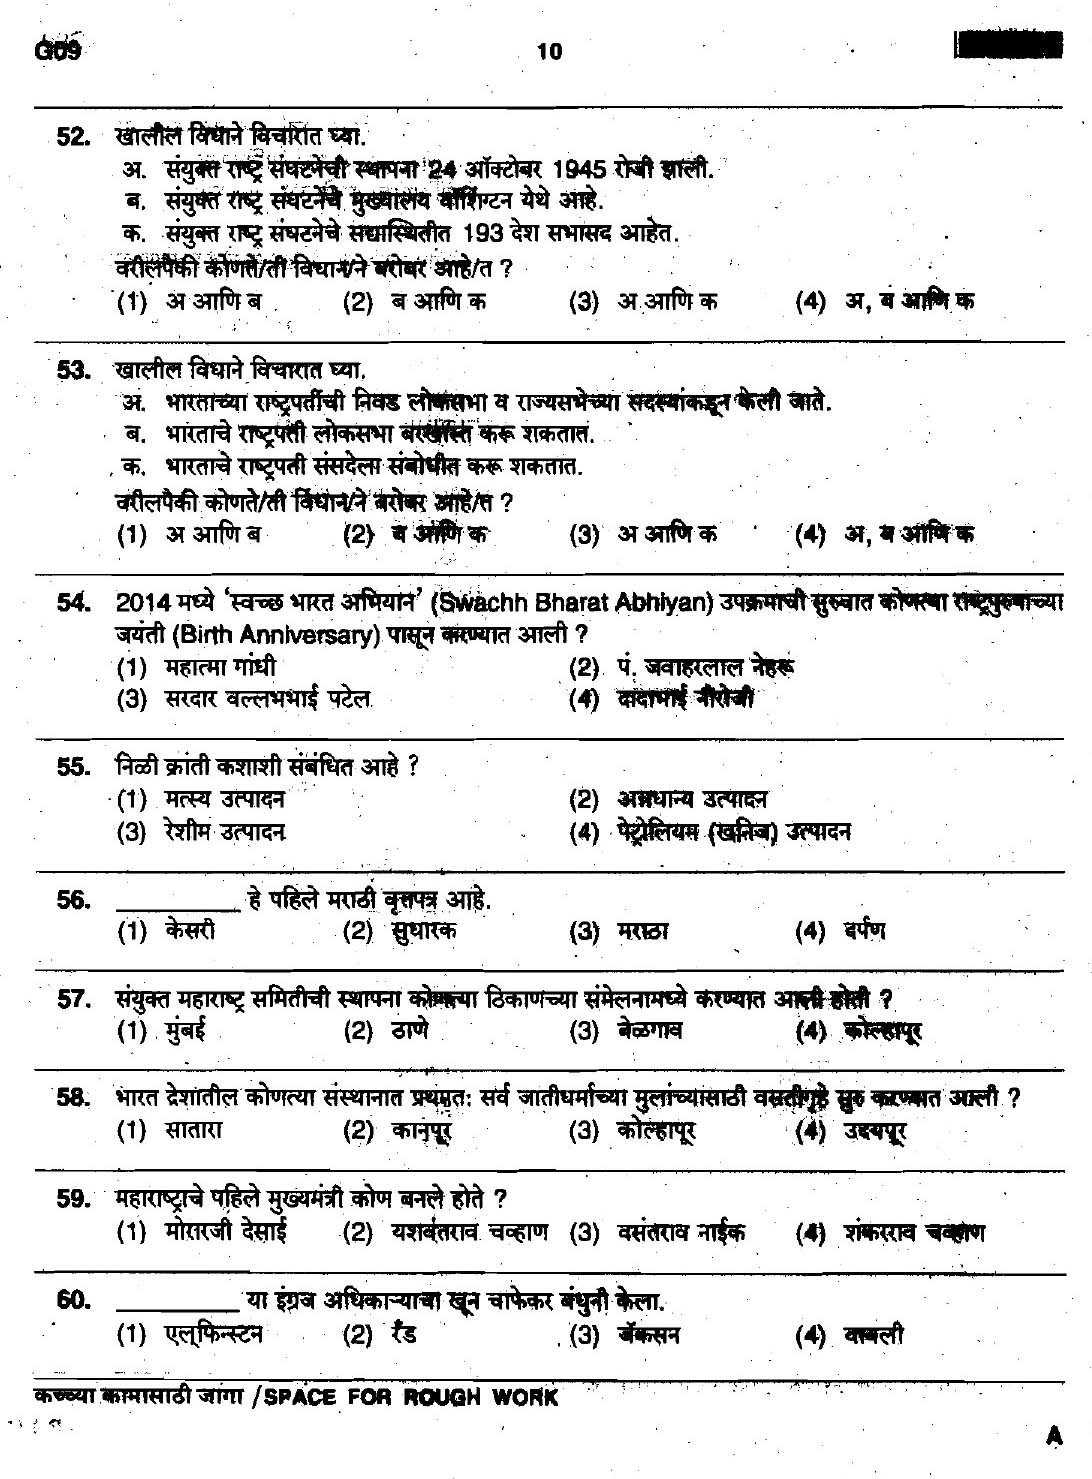 Maharashtra PSC Clerk Typist Preliminary Exam Question Paper 2017 9